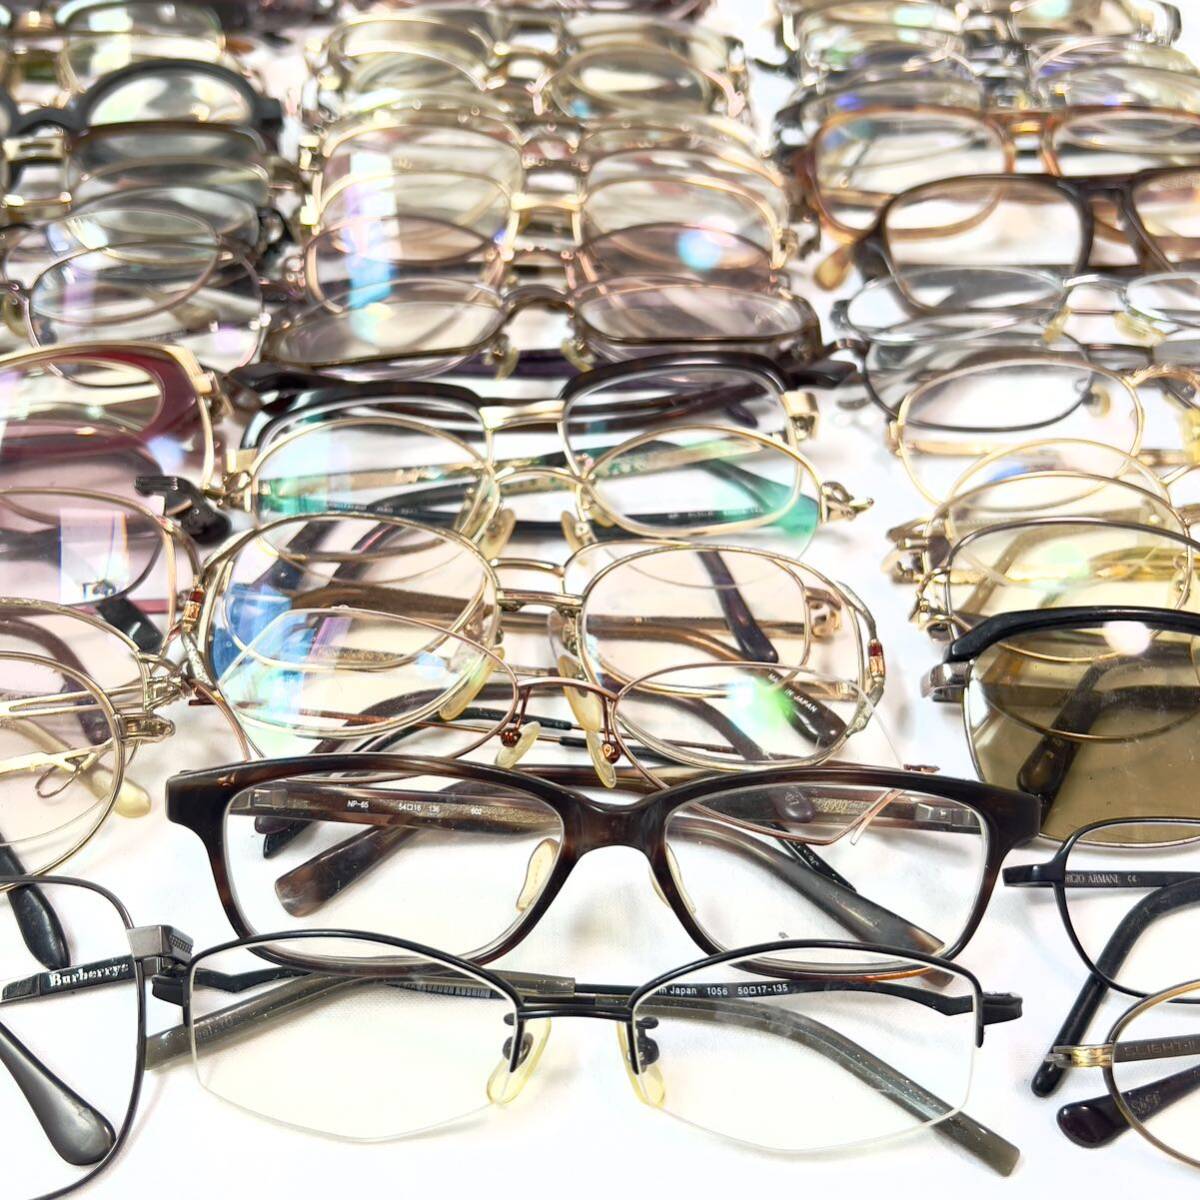  Junk glasses glasses frame 200 point and more set sale ⑤ 999.9 Yves Saint-Laurent Burberry etc. sunglasses together large amount set 